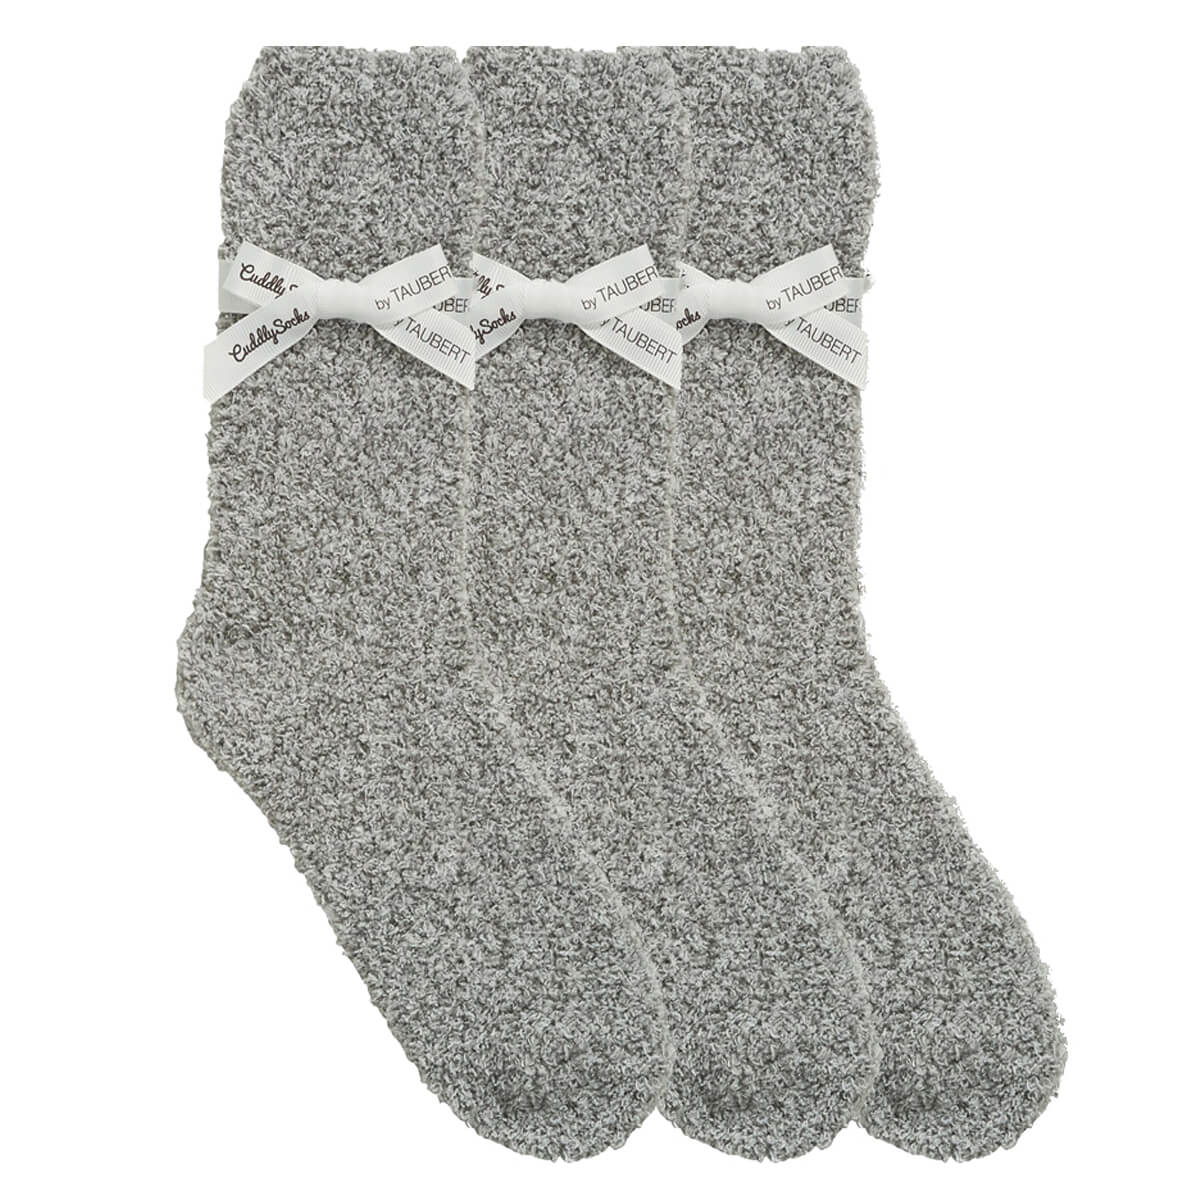 Pánské žinylkové spací ponožky sv.šedá - Taubert